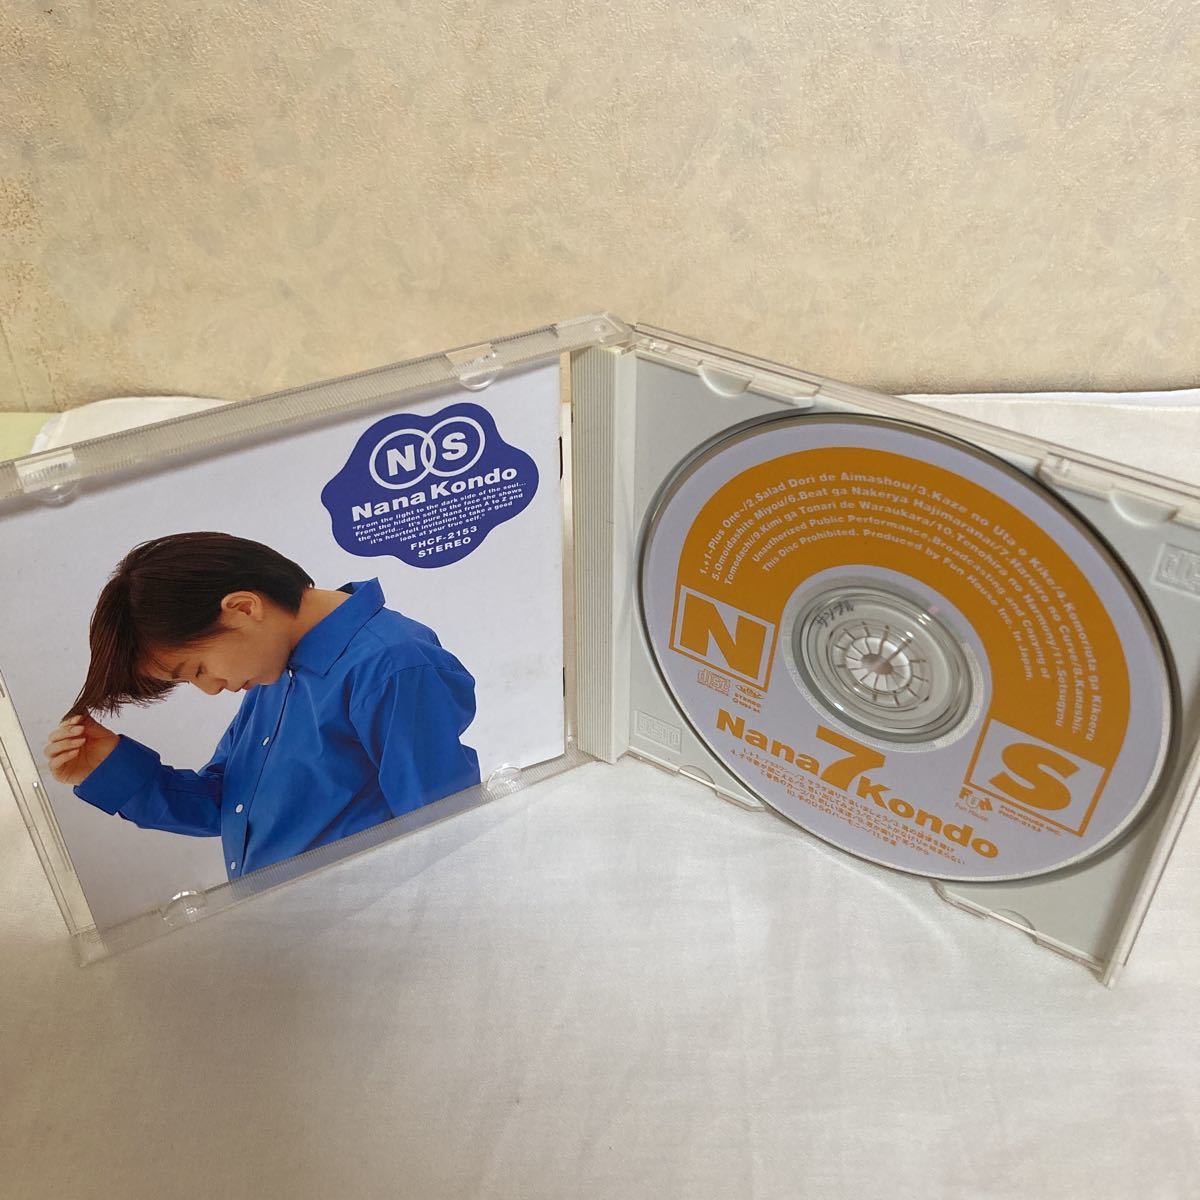  Kondo Nana N/S CD альбом музыка 1994 год ...... Японская музыка ......N S Nana Kondo 7 Kondo Nana мозаика составная картинка 